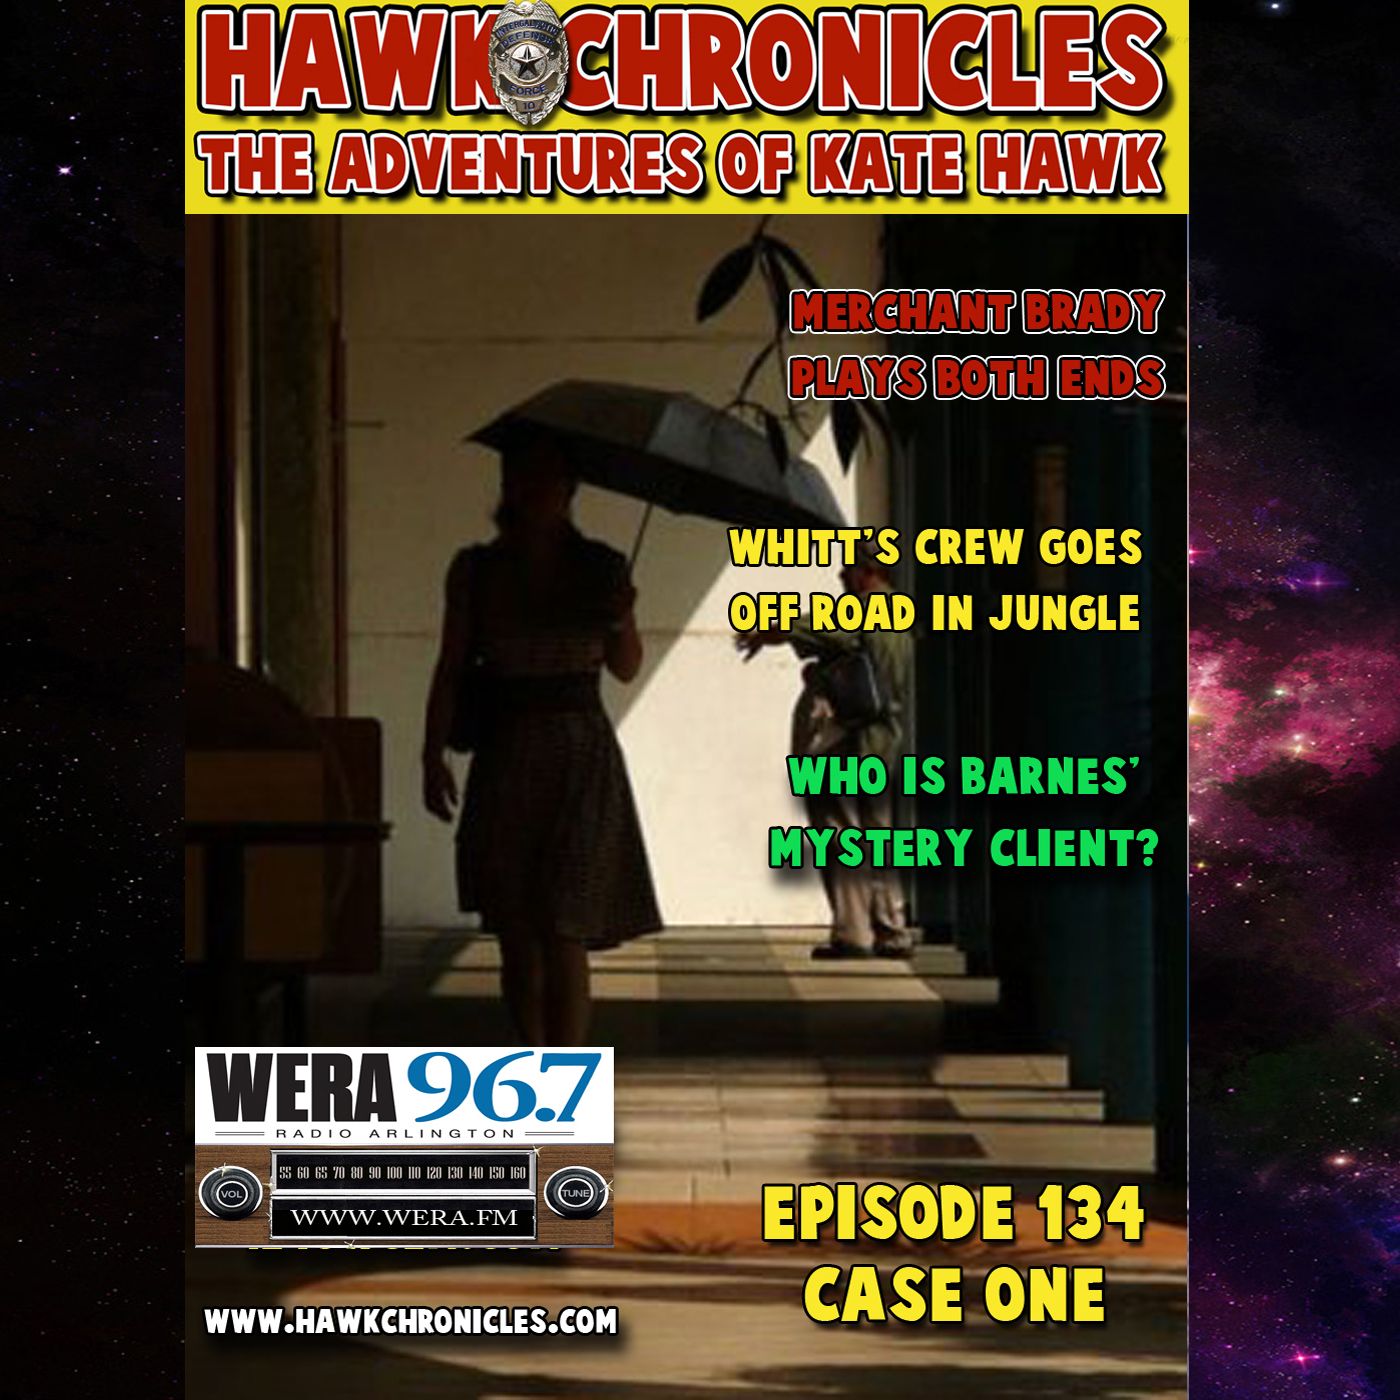 Episode 134 Hawk Chronicles 